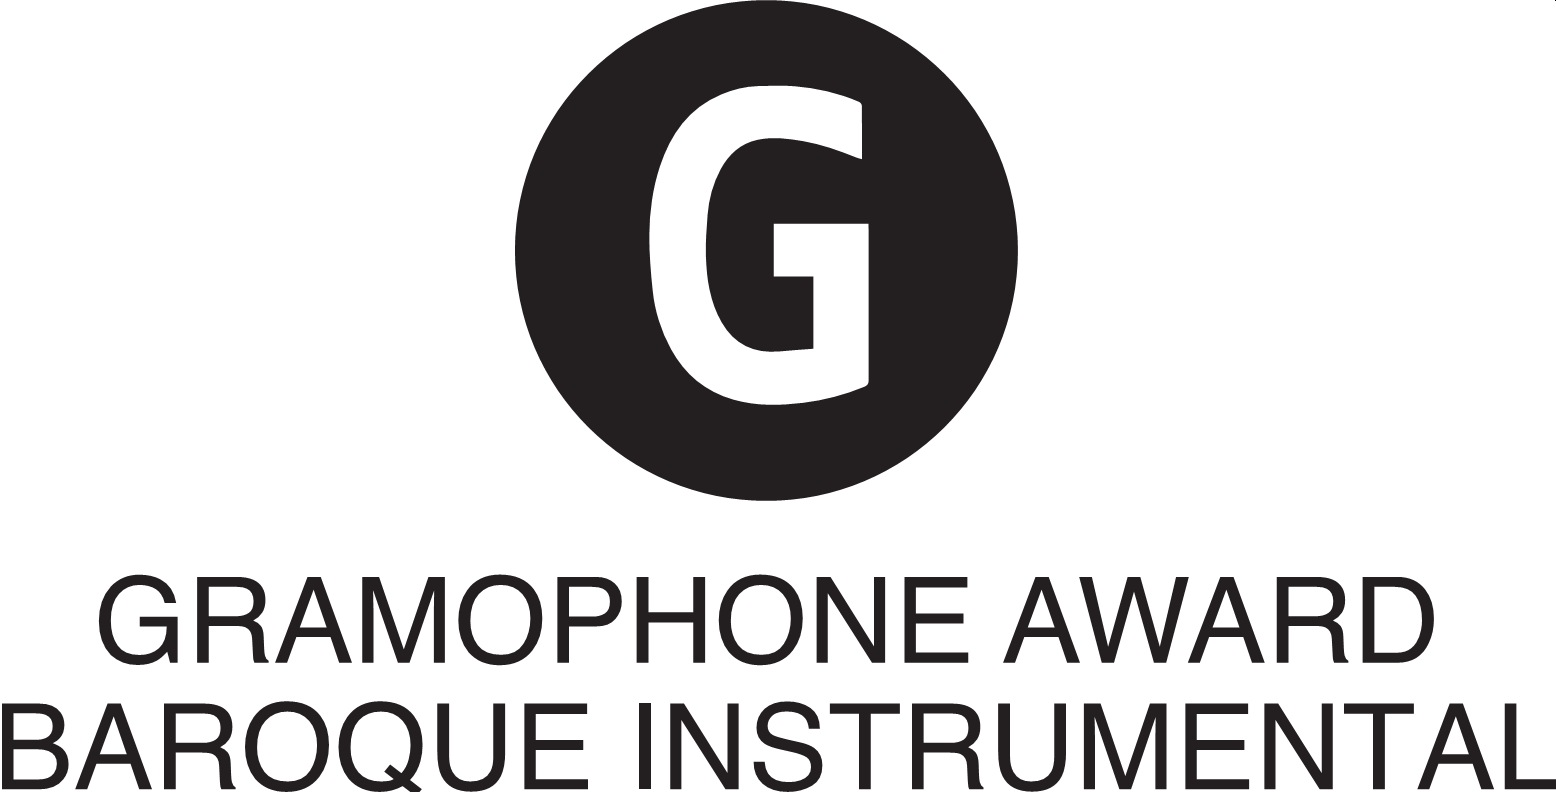 Gramophone Award: 'Baroque Instrumental' (2013)